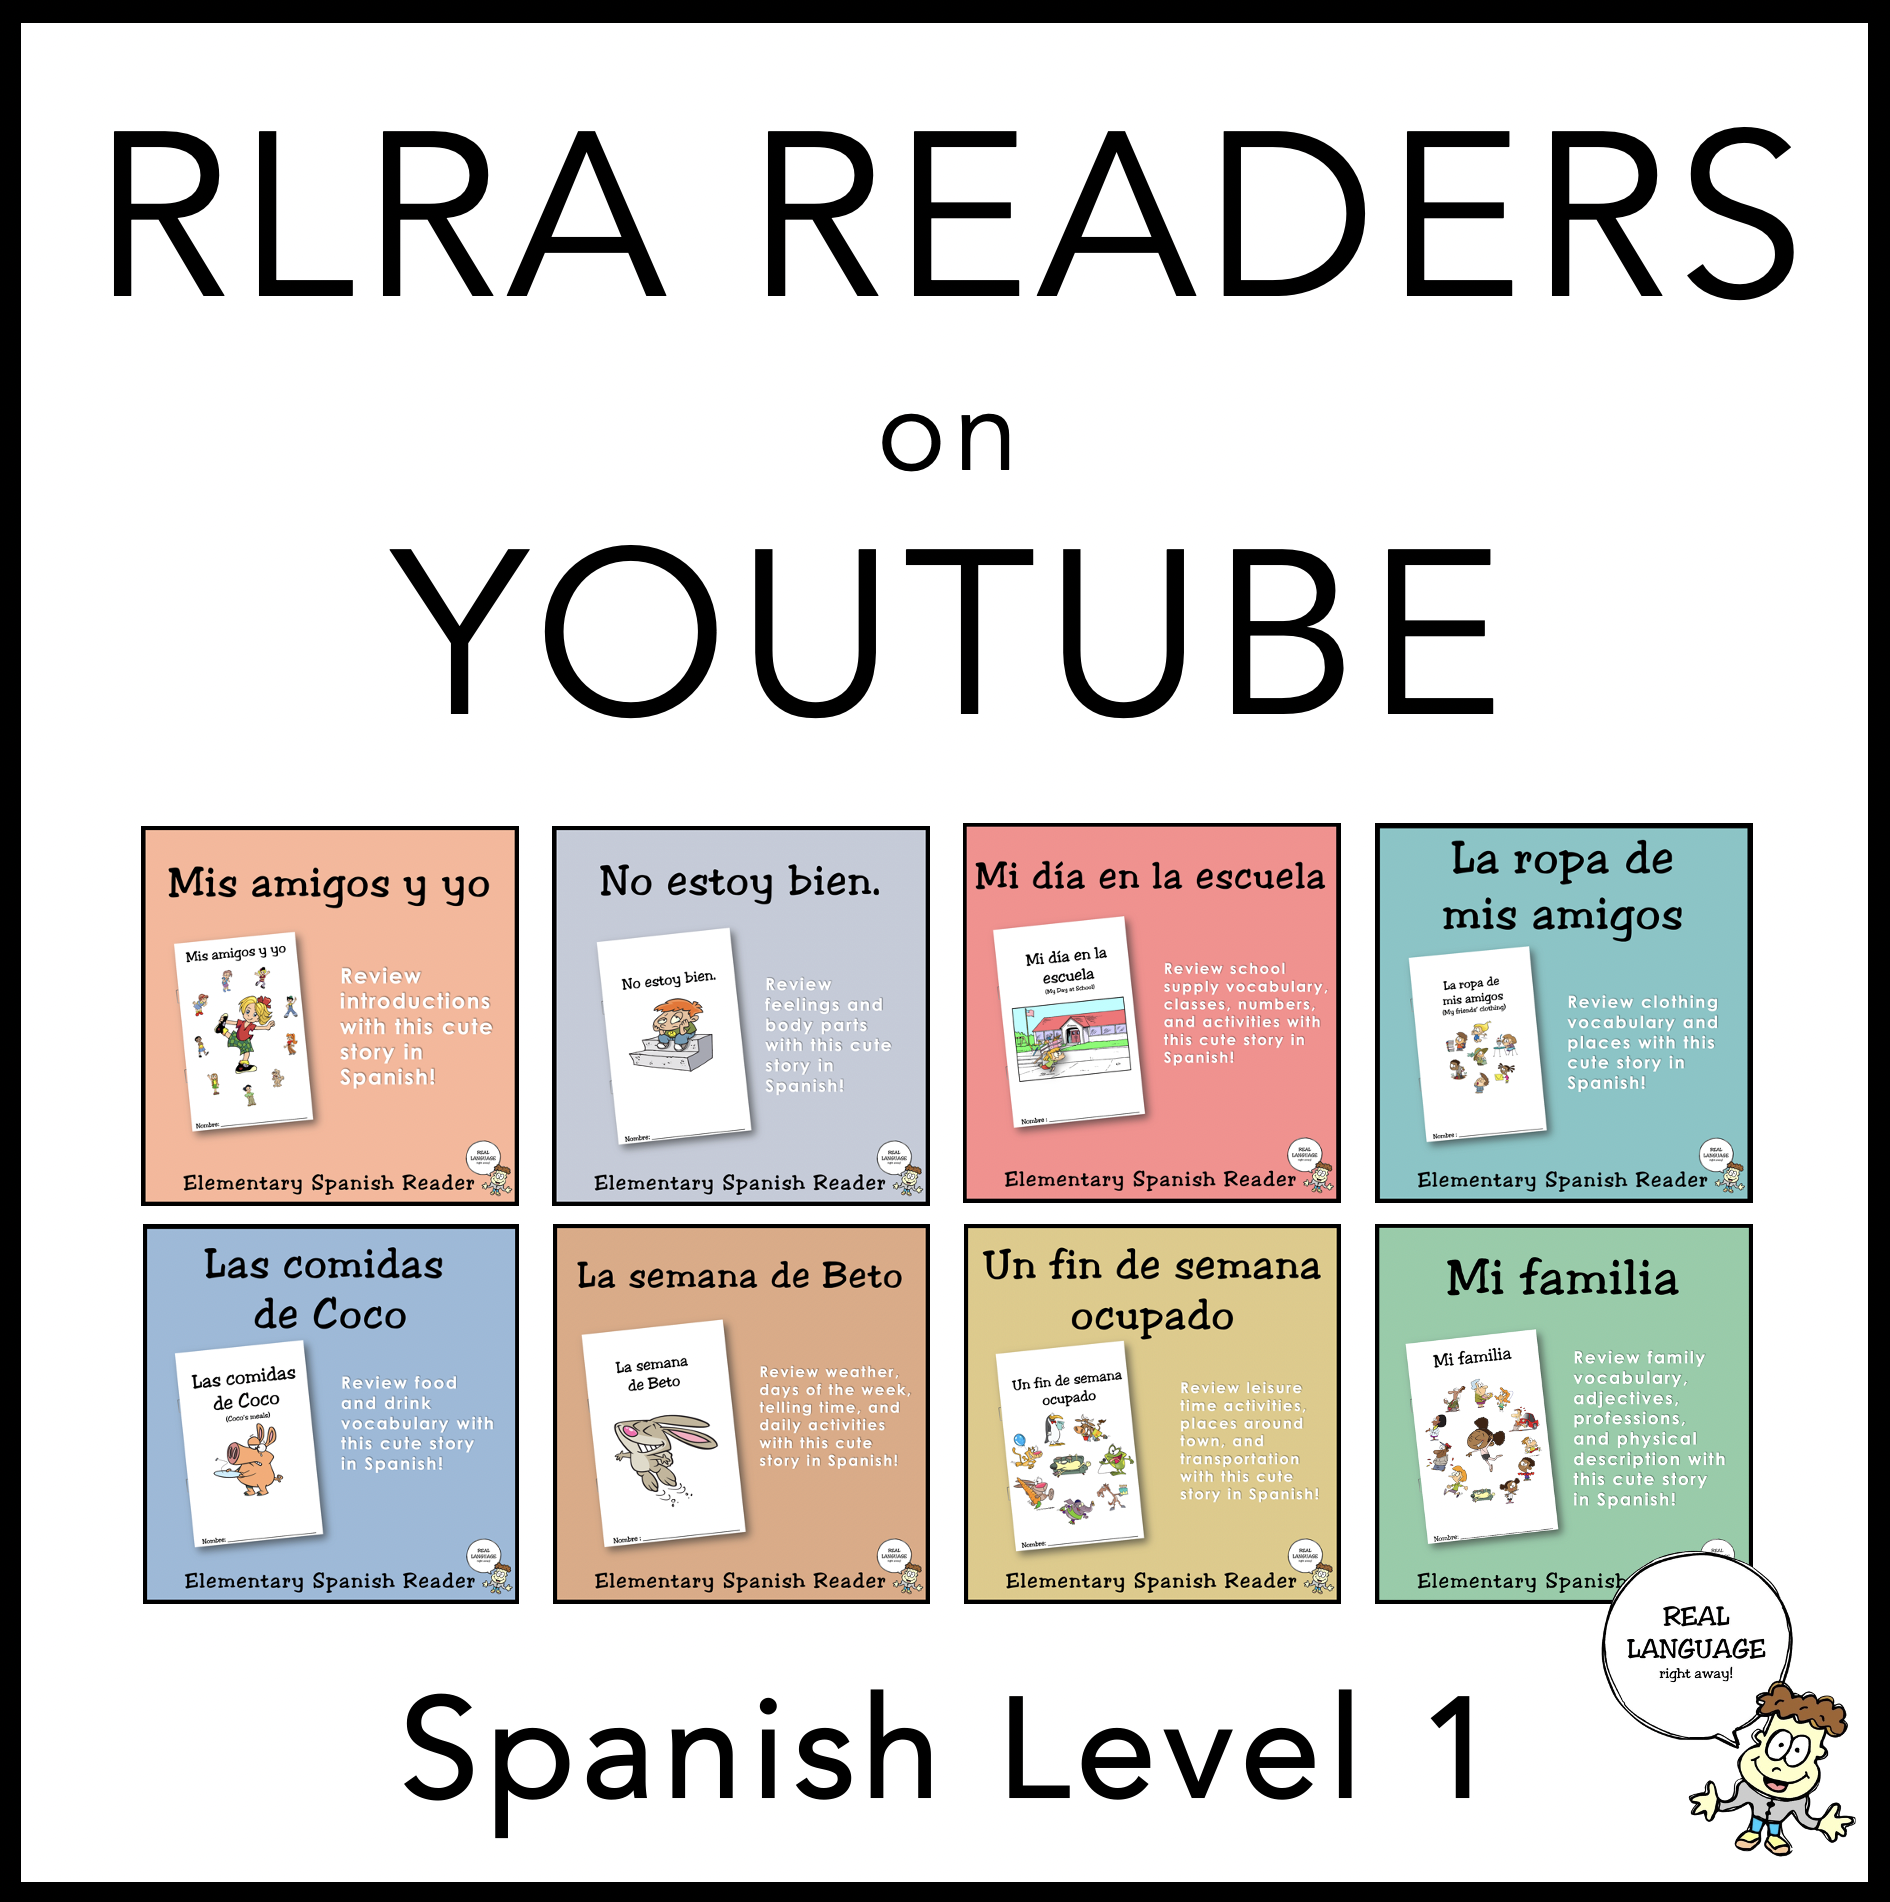 Spanish Readers Playlist